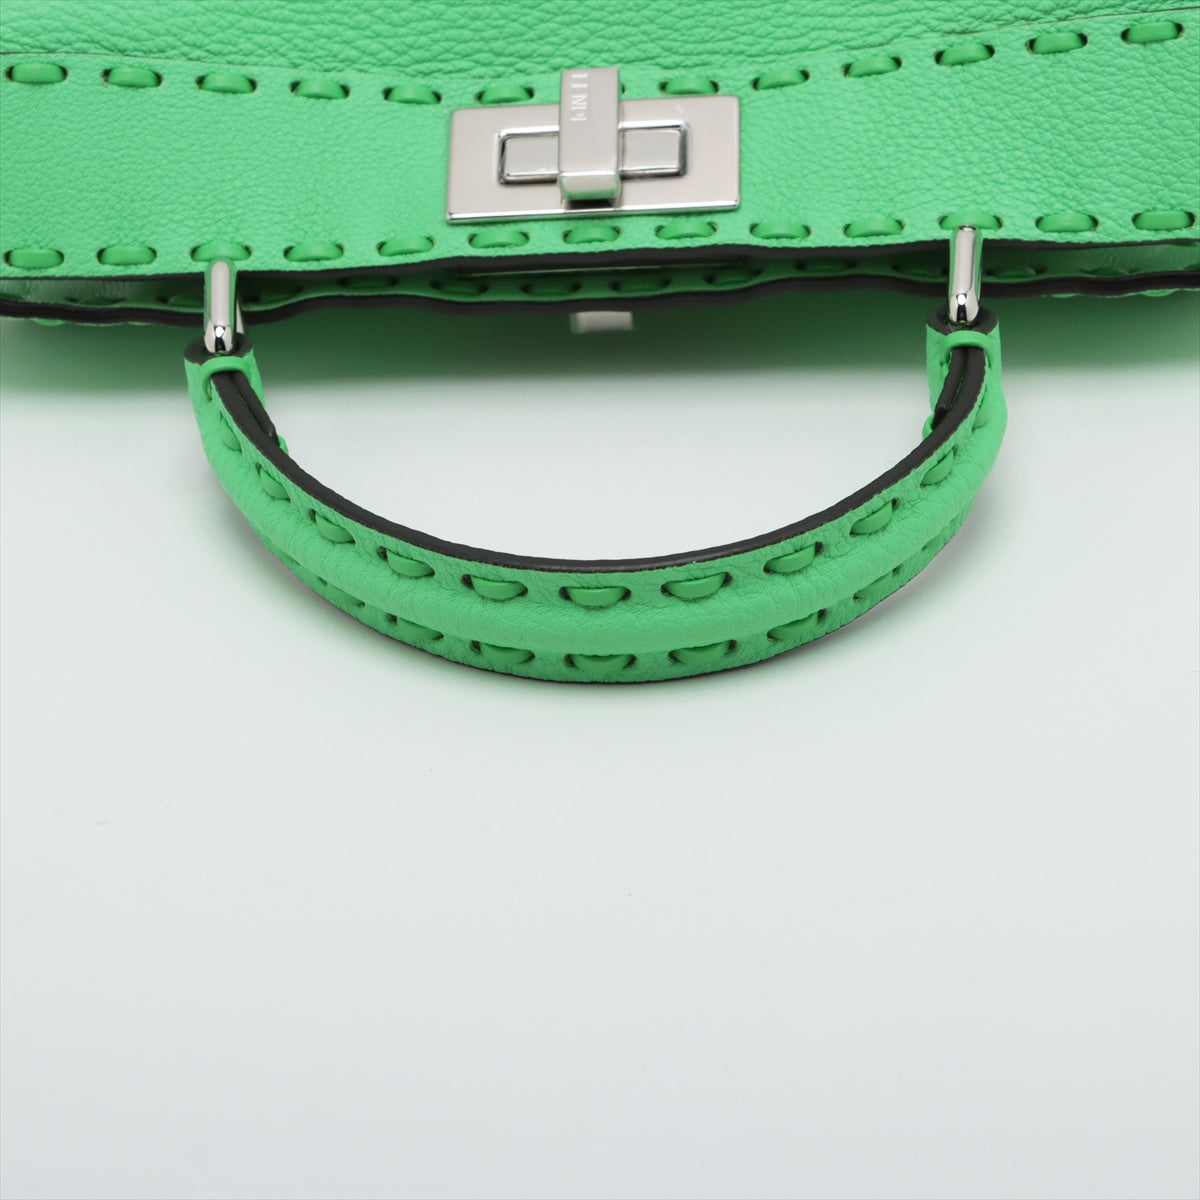 Fendi Selleria Peek-a-boo ICU Co., Ltd. small Leather 2way handbag Green 8BN327